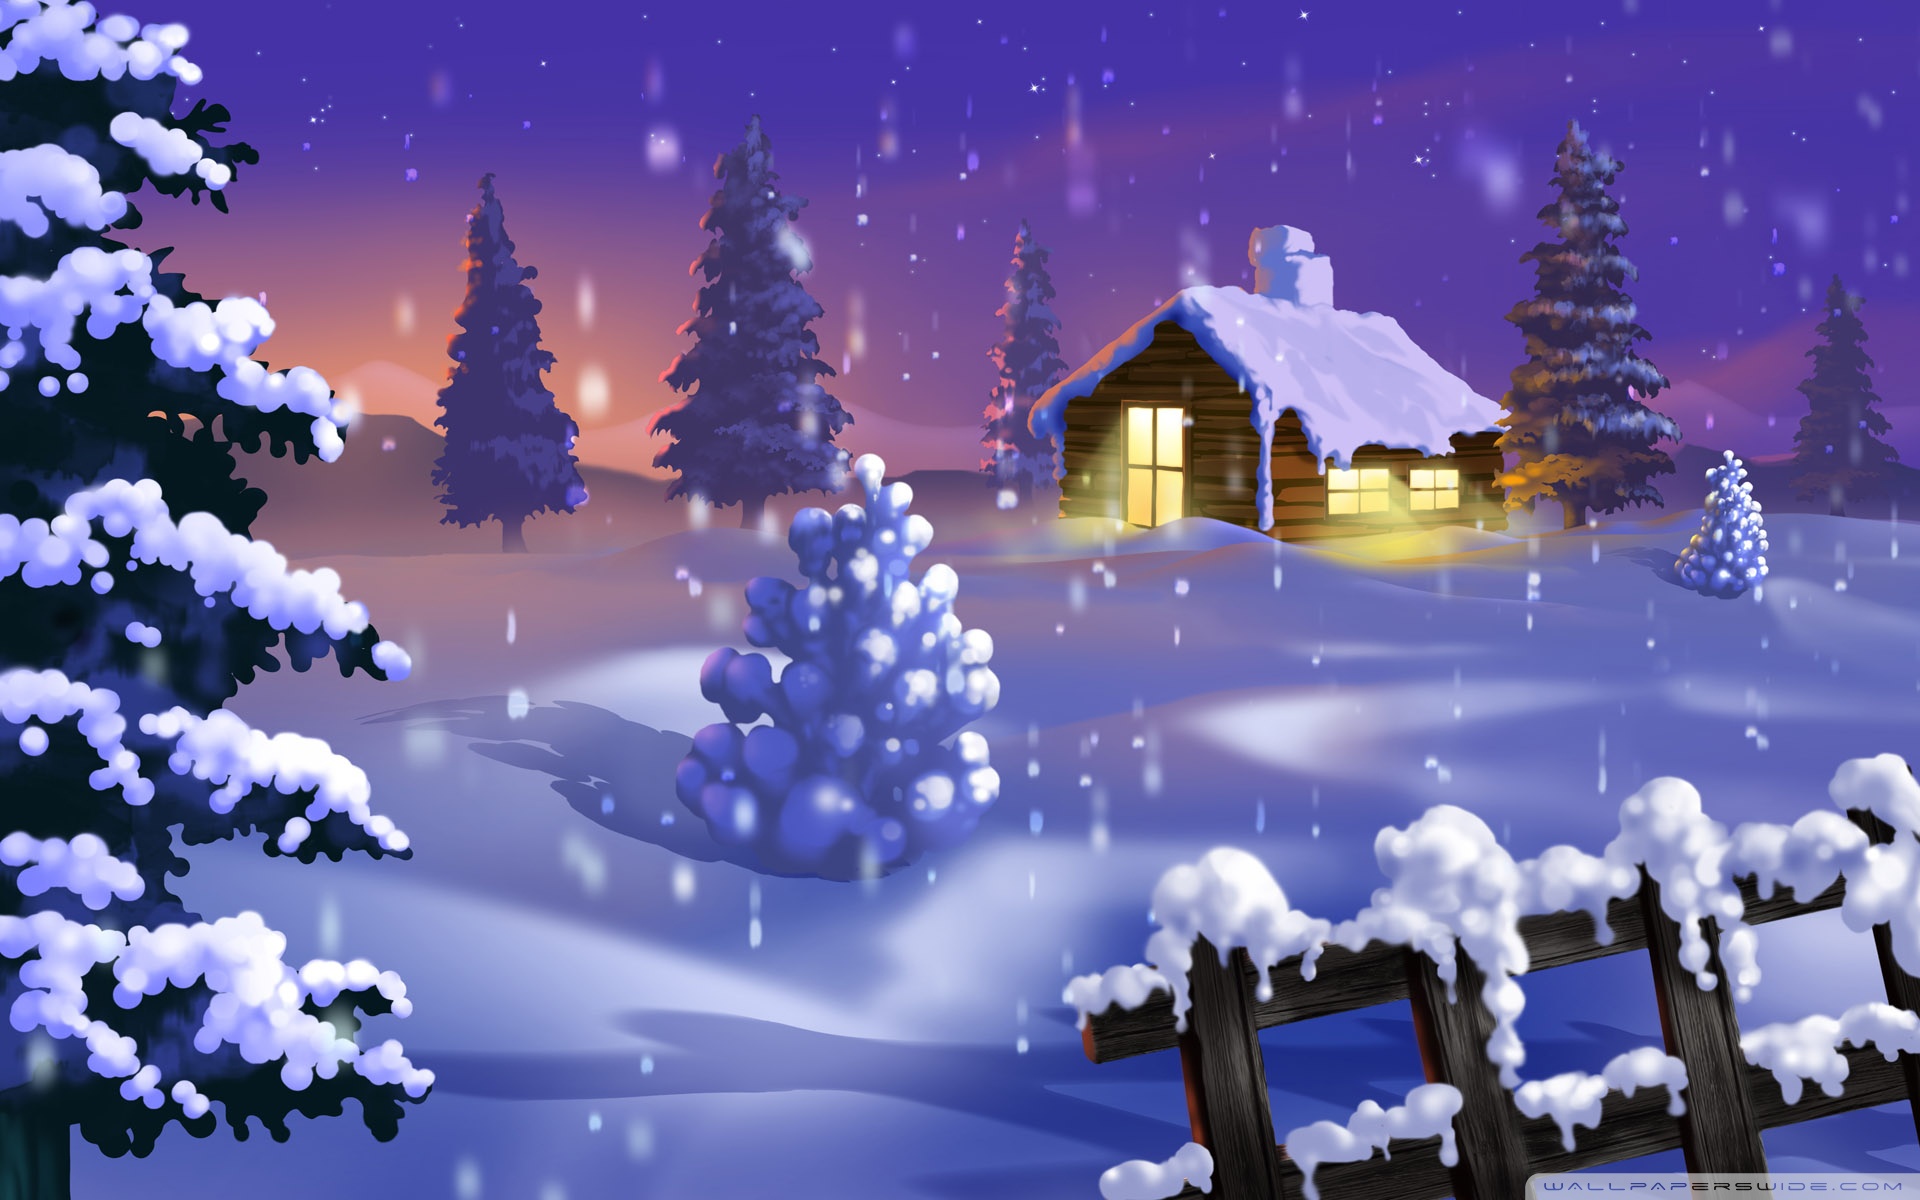 Classic Winter Scene Painting HD desktop wallpaper High resolution